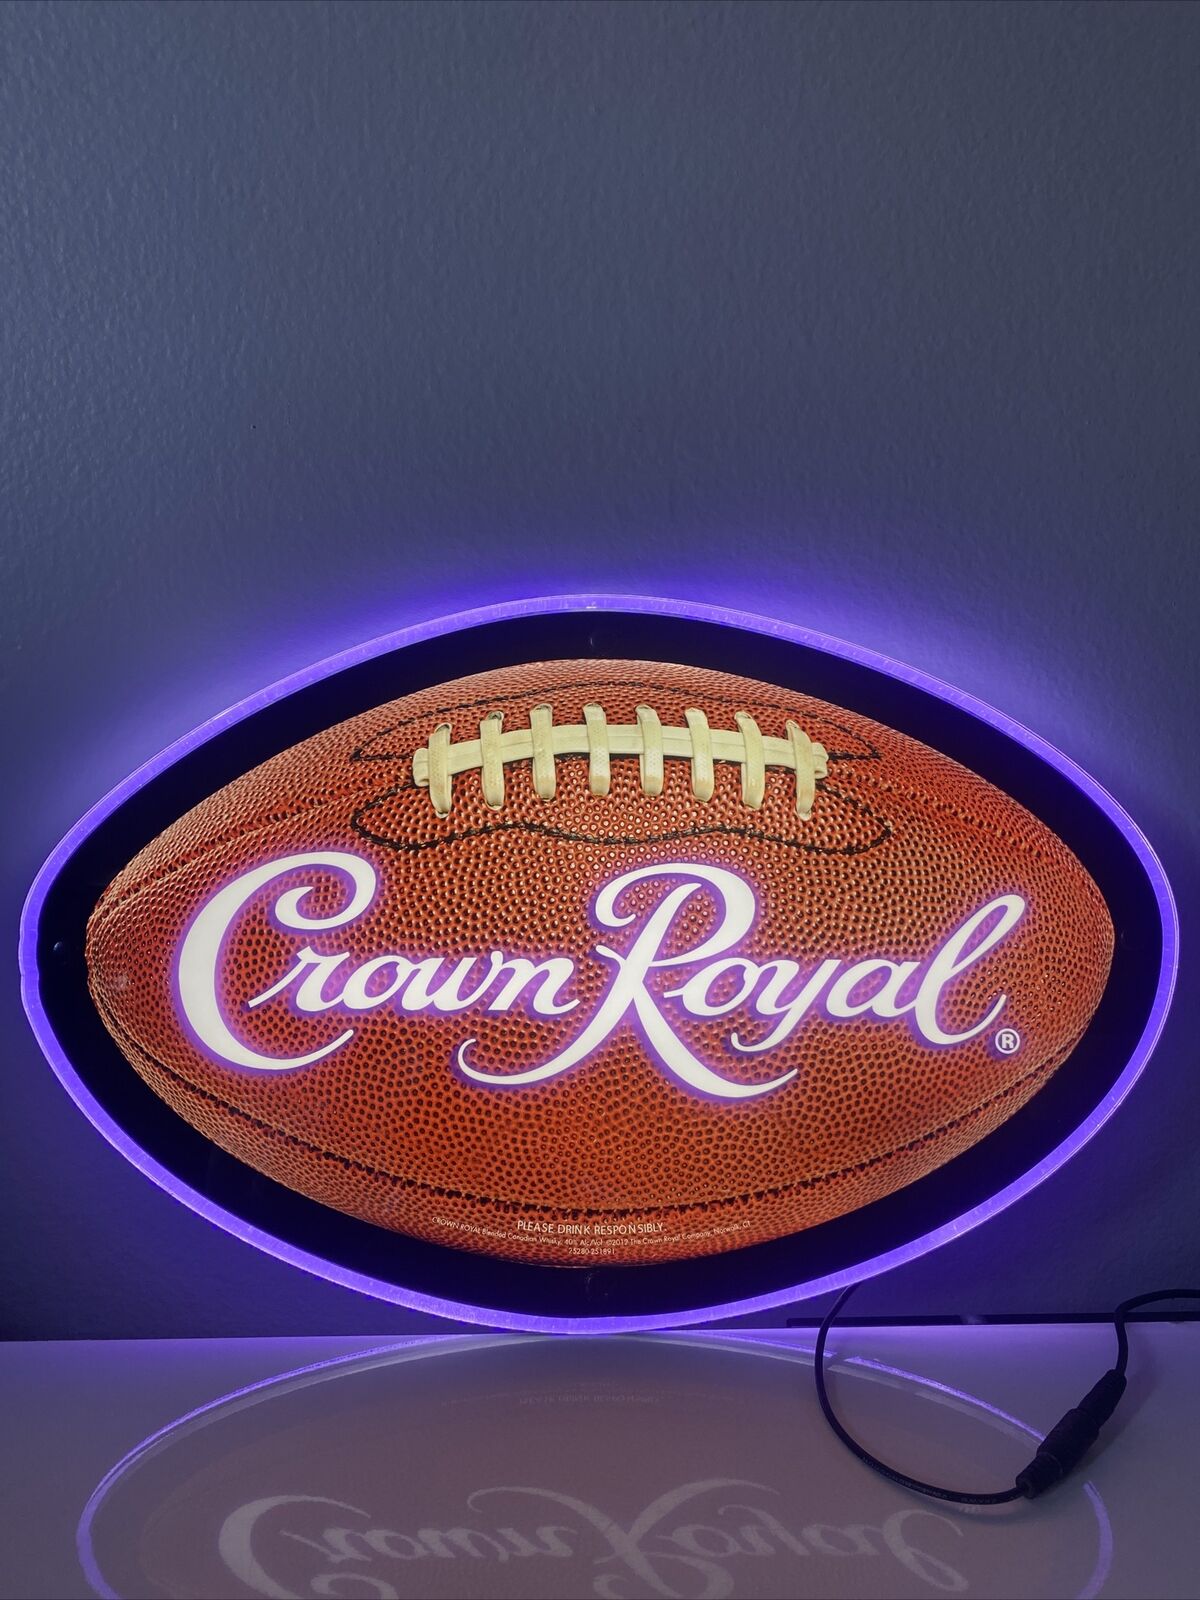 CROWN ROYAL FOOTBALL LED BAR SIGN MAN CAVE GARAGE DECOR LIGHT WHISKY WHISKEY 